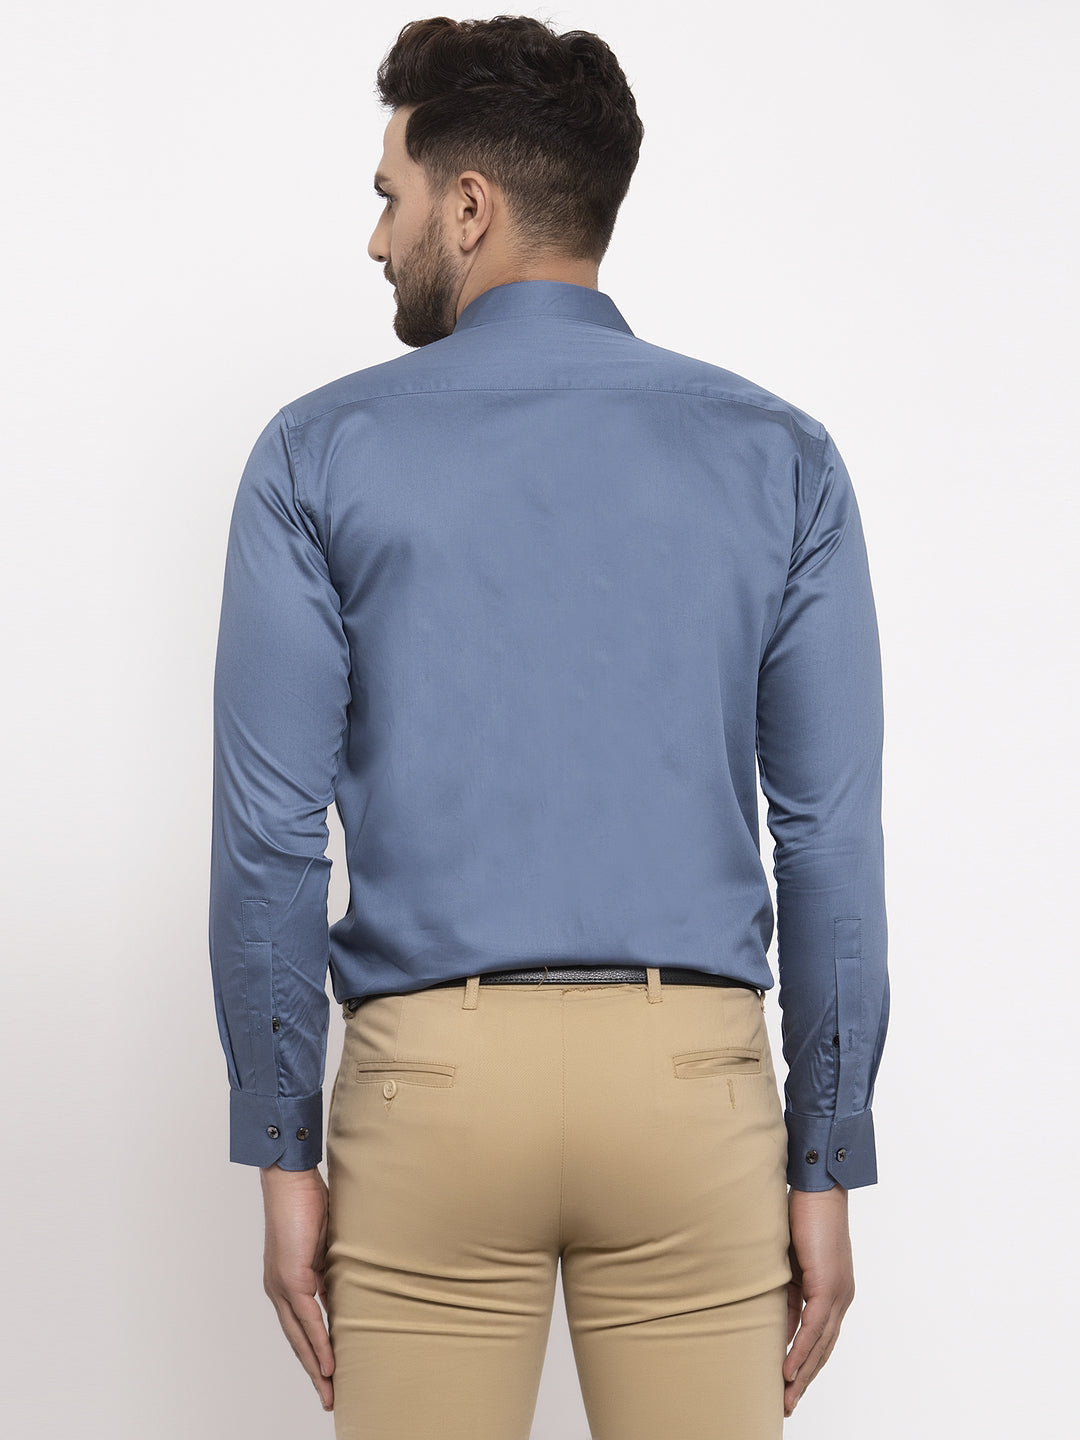 Men's Navy Cotton Solid Formal Shirt's ( SF 768Teal ) - Jainish